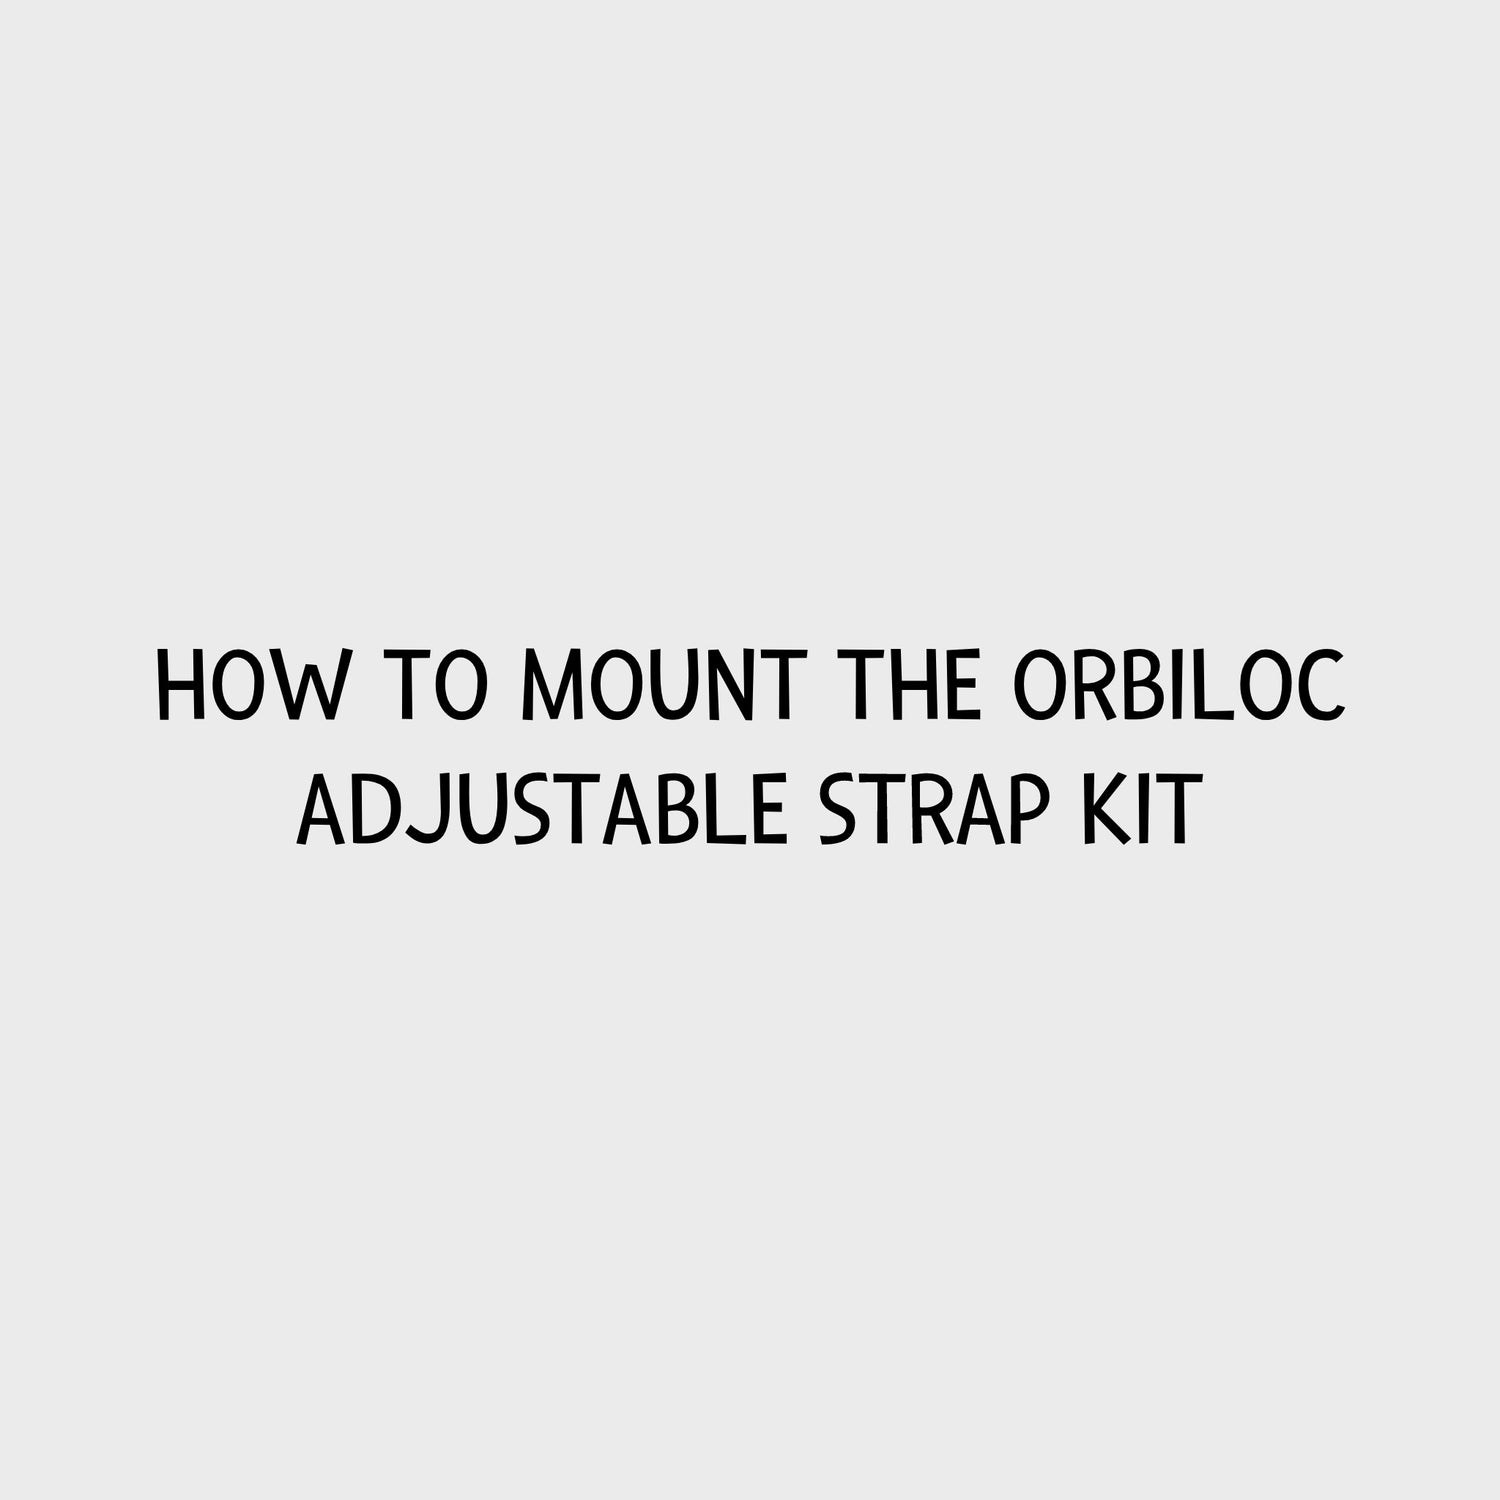 Video - How to mount the Orbiloc Adjustable Strap Kit